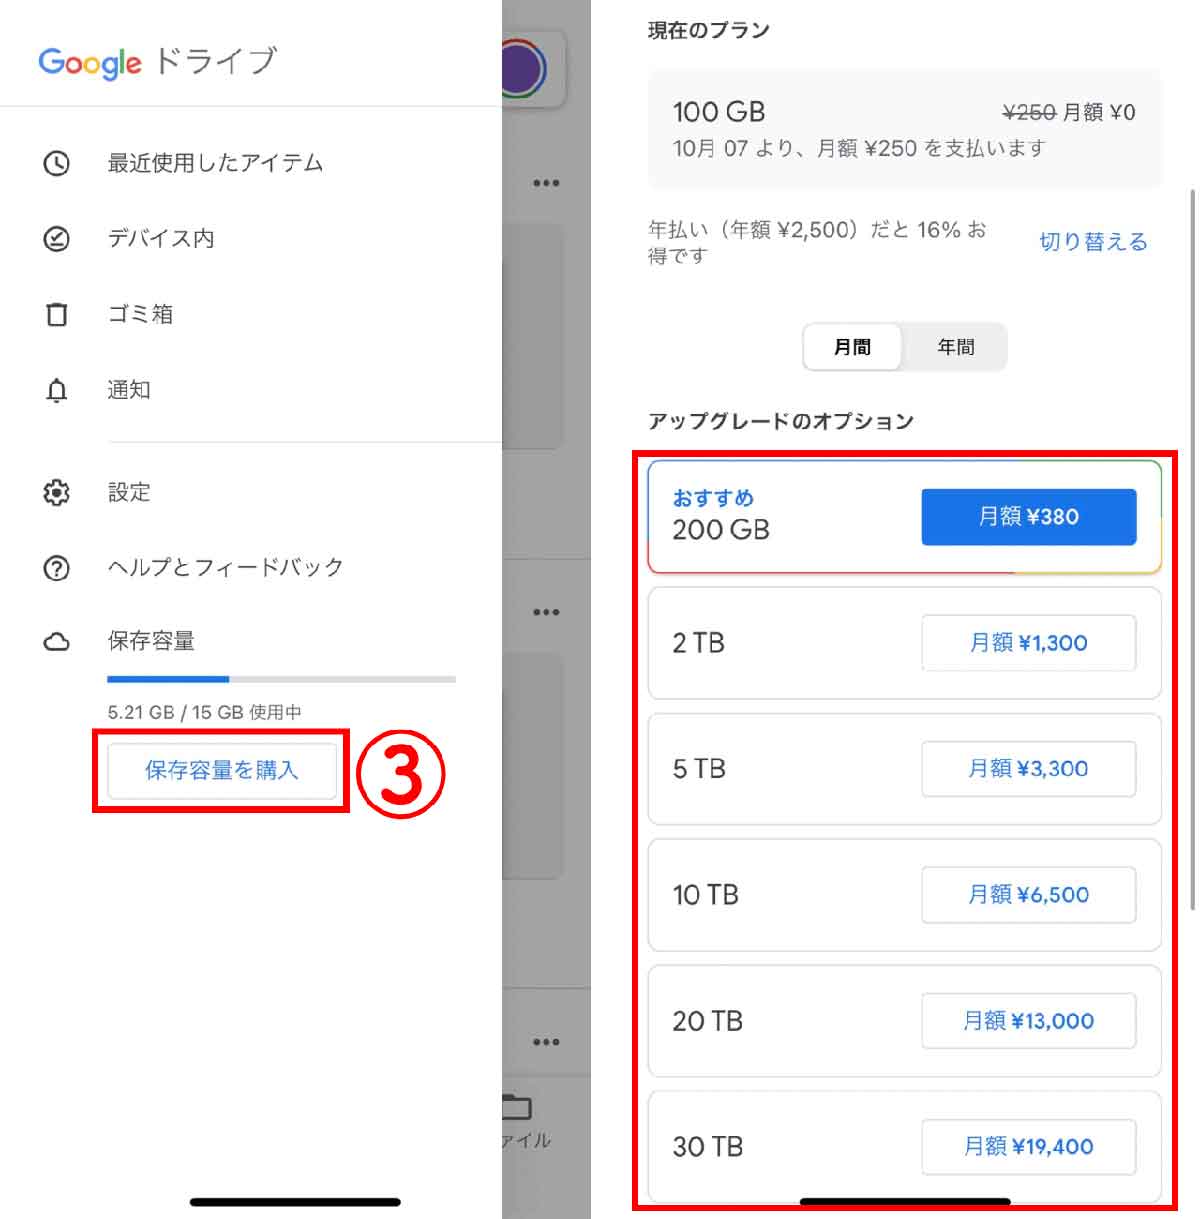 Google Oneに登録する方法2